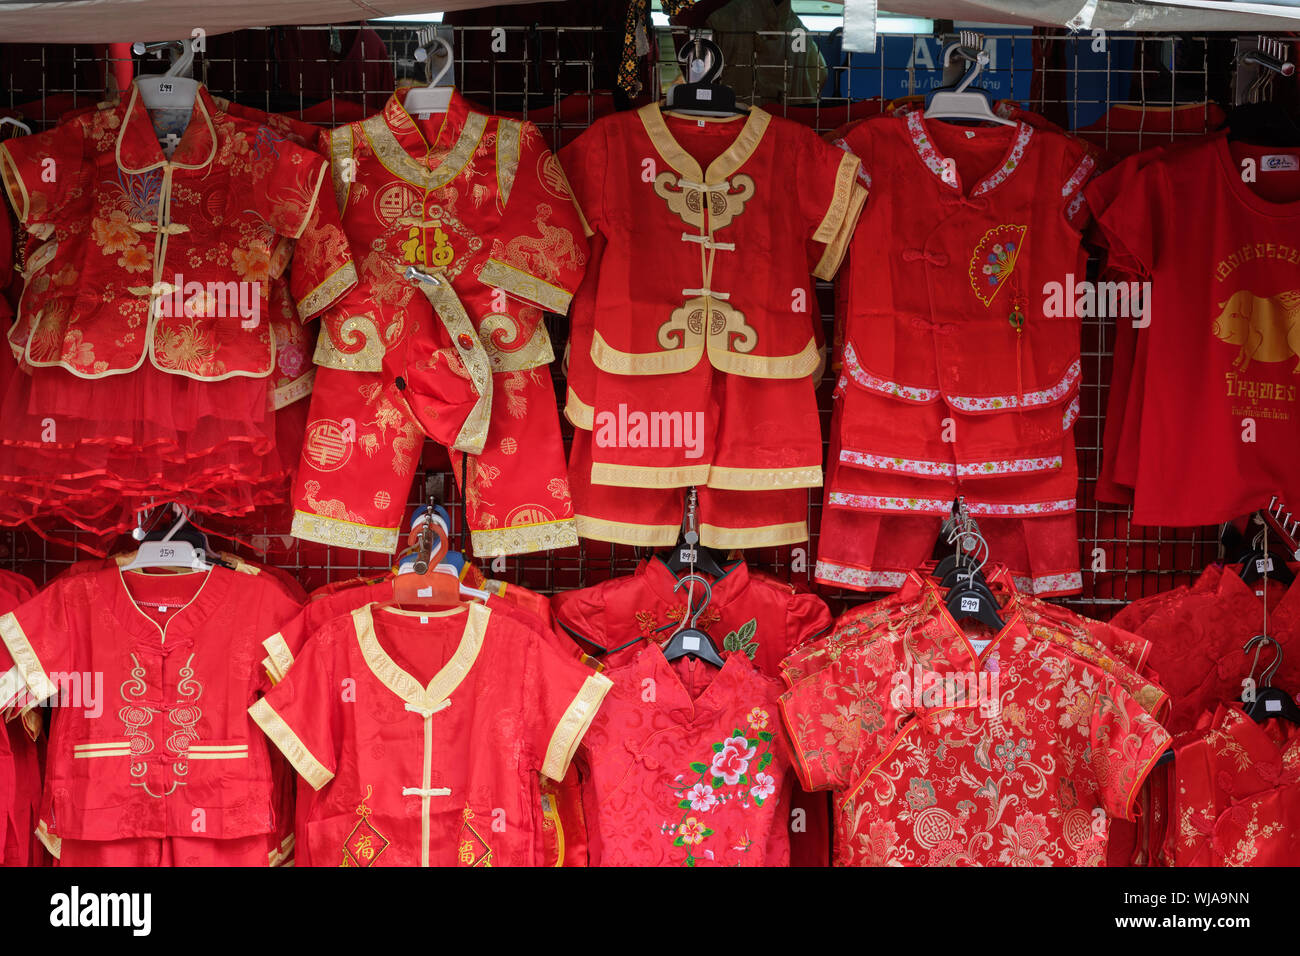 Ropa china roja fotografías e imágenes de alta resolución - Alamy